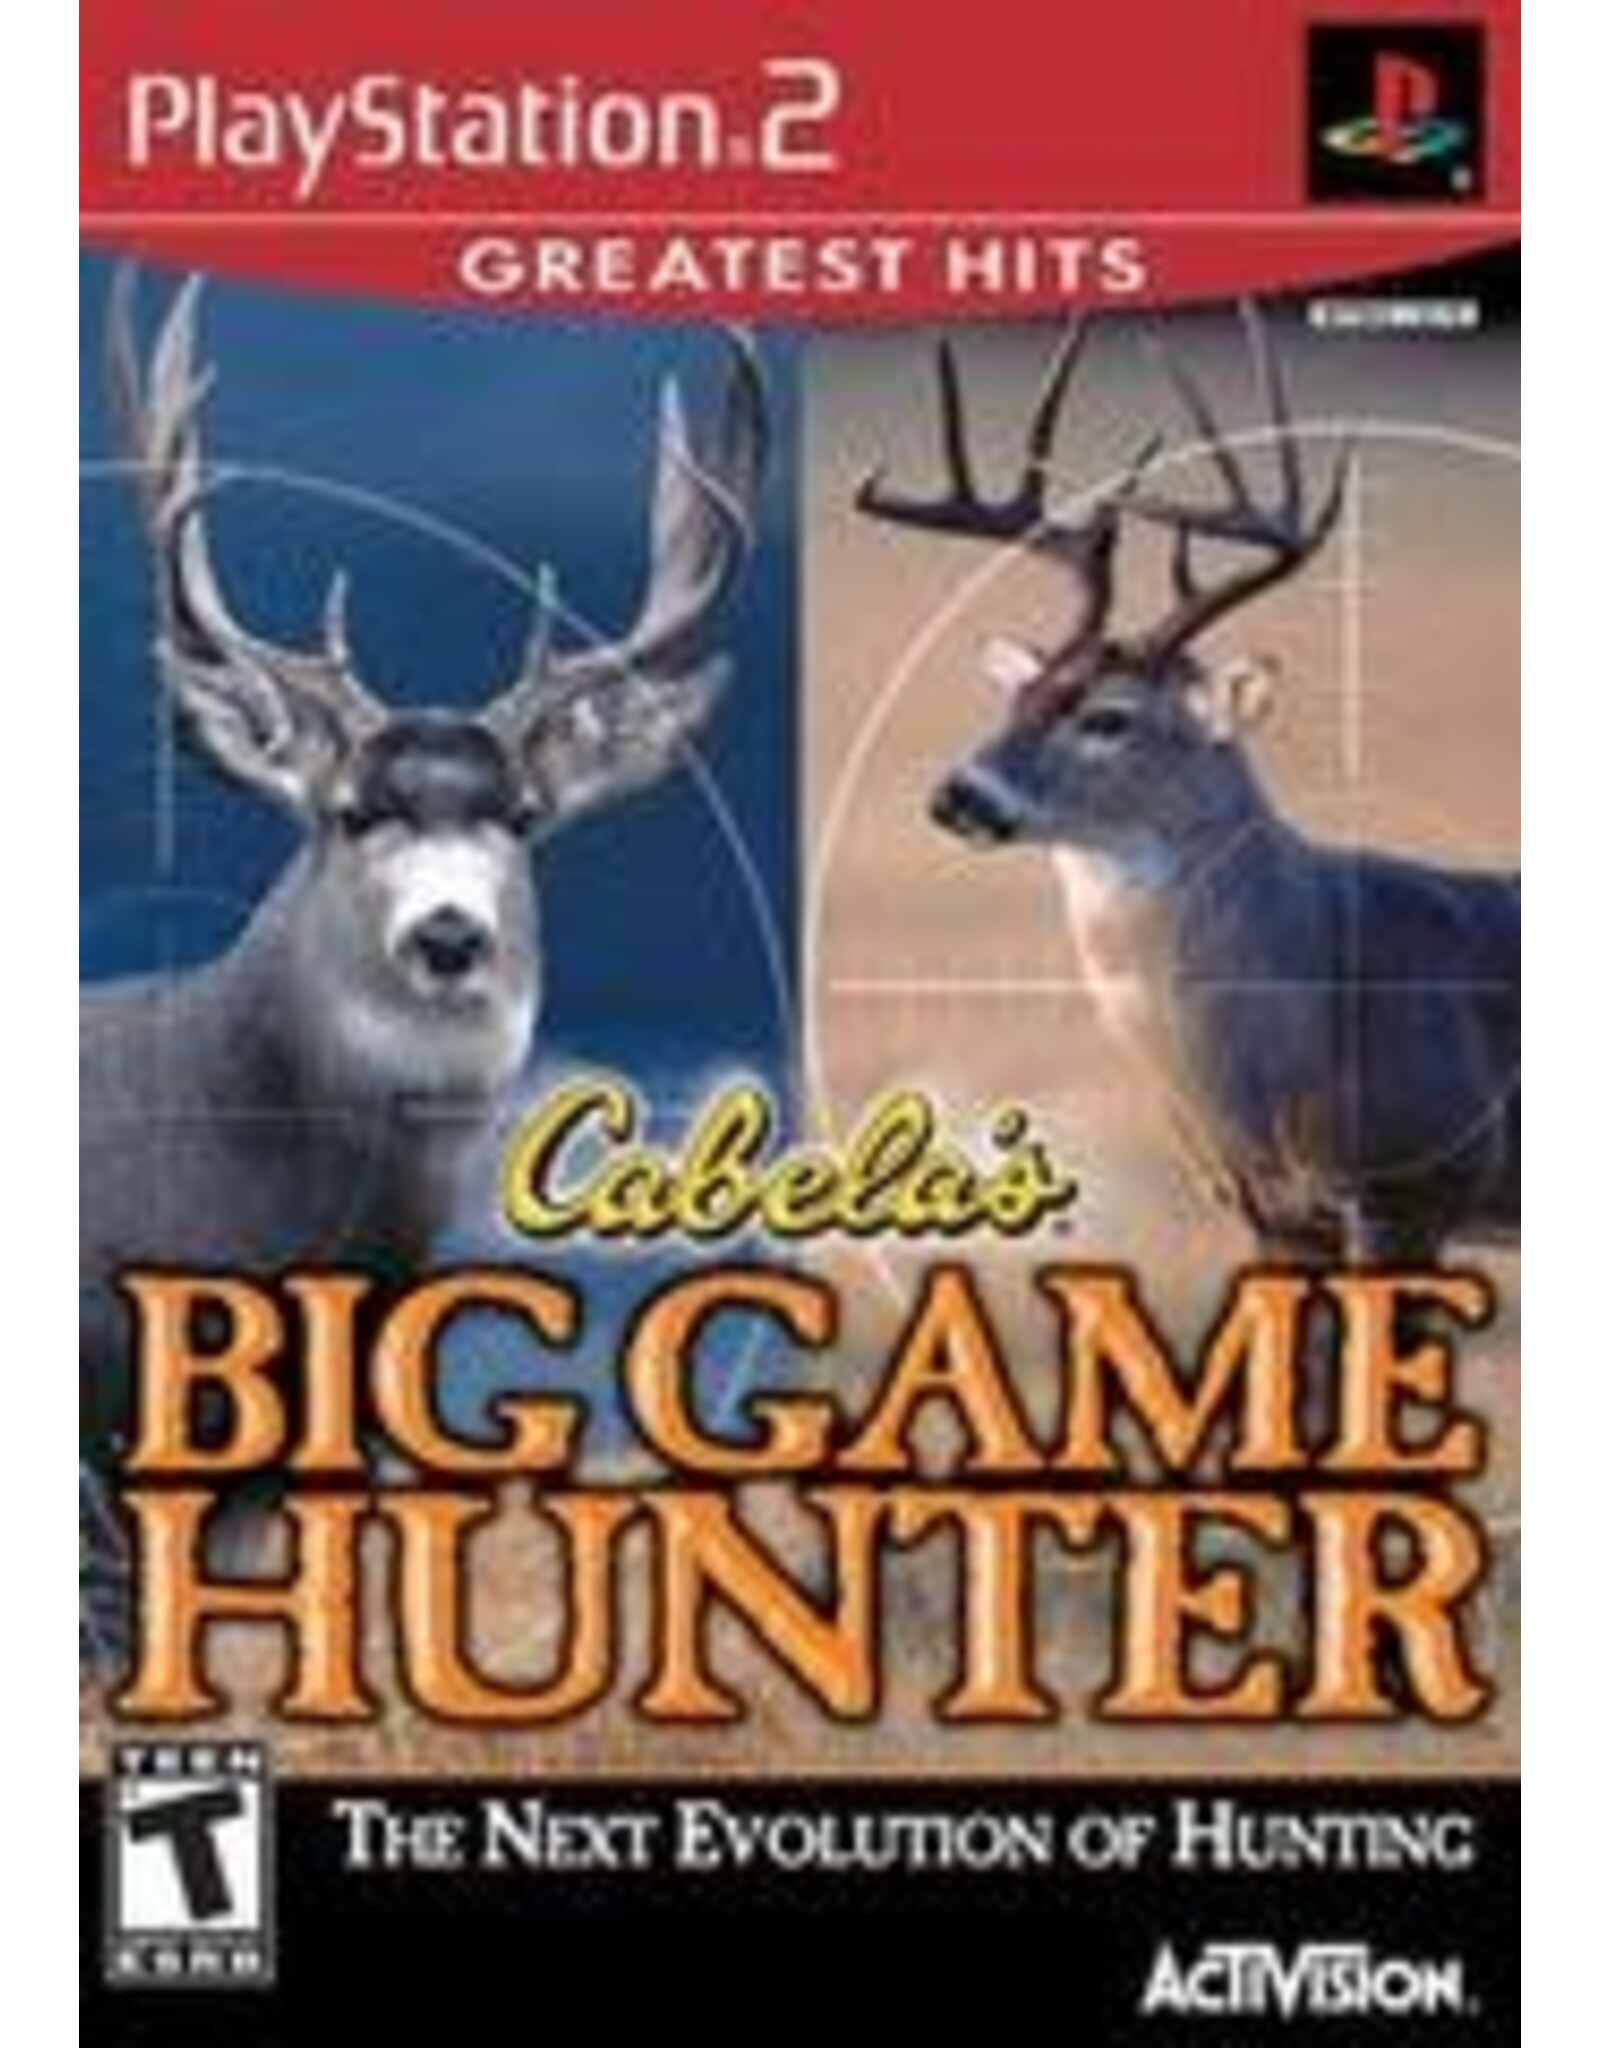 Playstation 2 Cabela's Big Game Hunter (Greatest Hits, CiB)